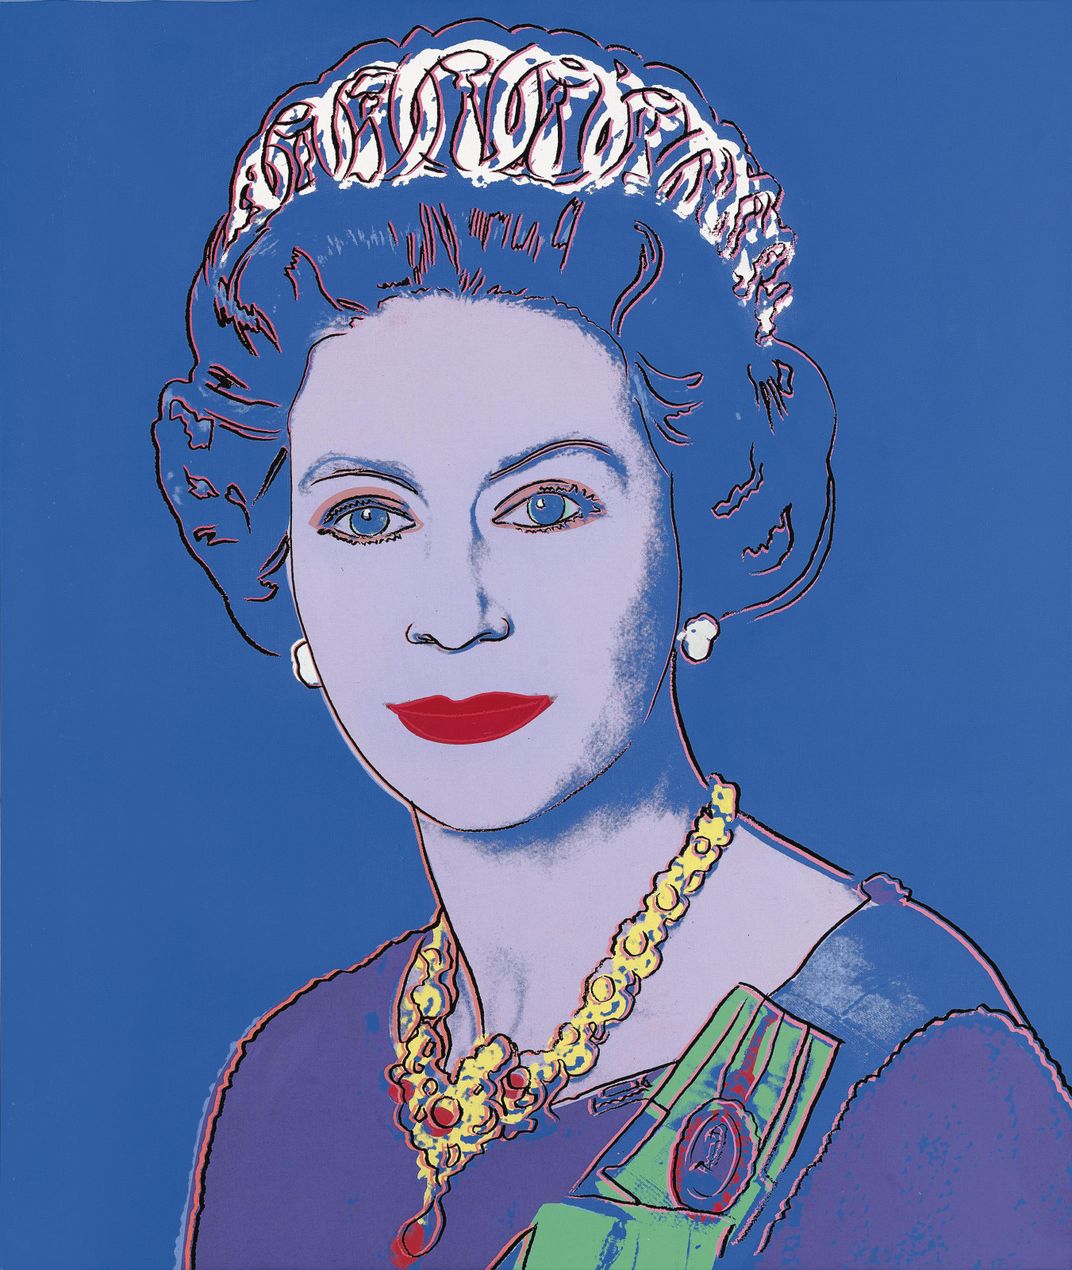 Andy Warhol sérigraphie d'Elizabeth II